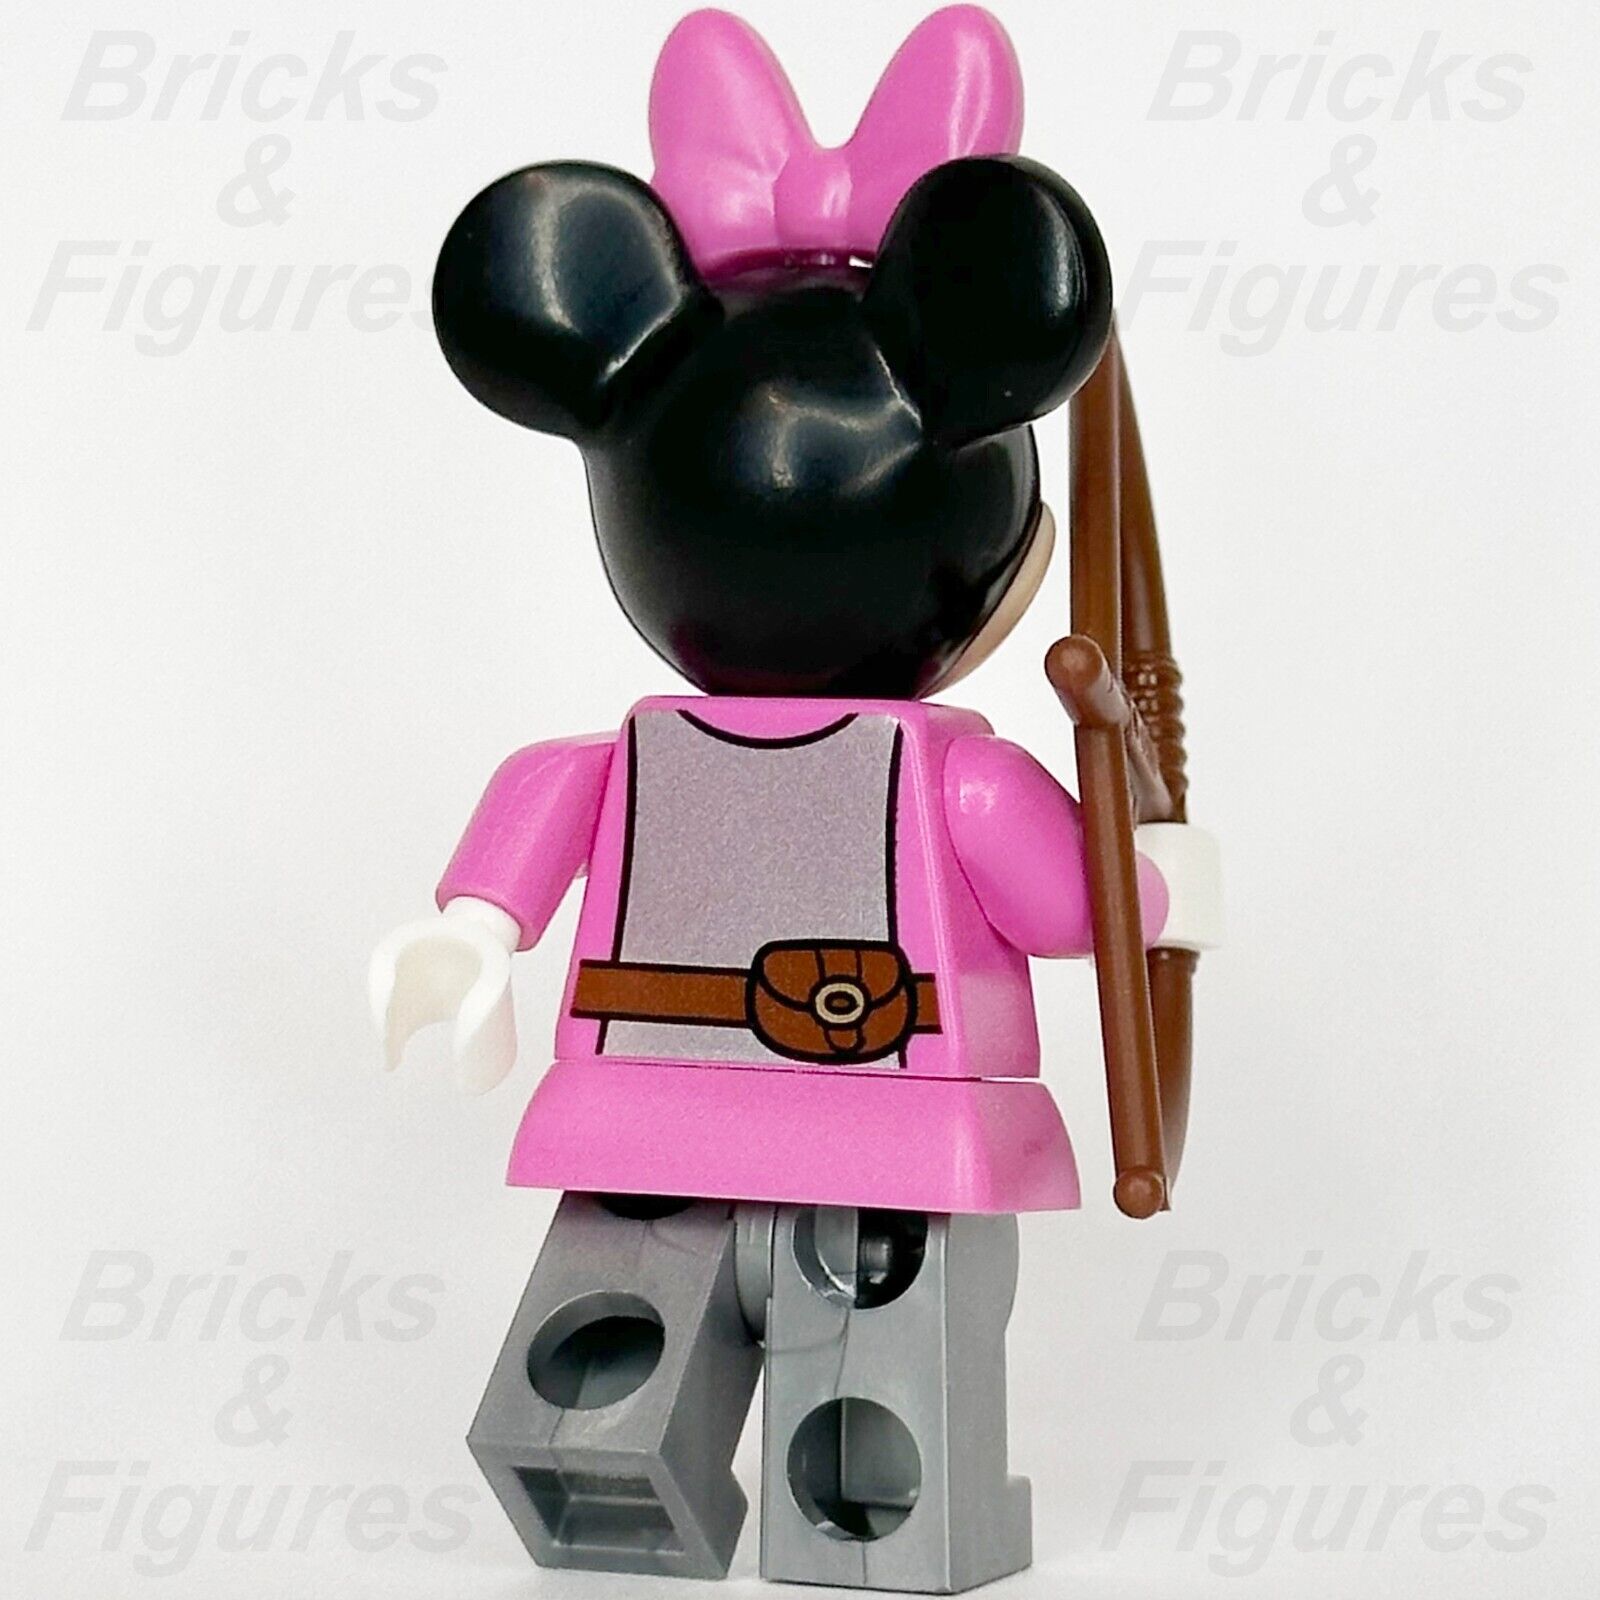 LEGO Disney Minnie Mouse Knight Minifigure Mickey and Friends 10780 dis077 - Bricks & Figures